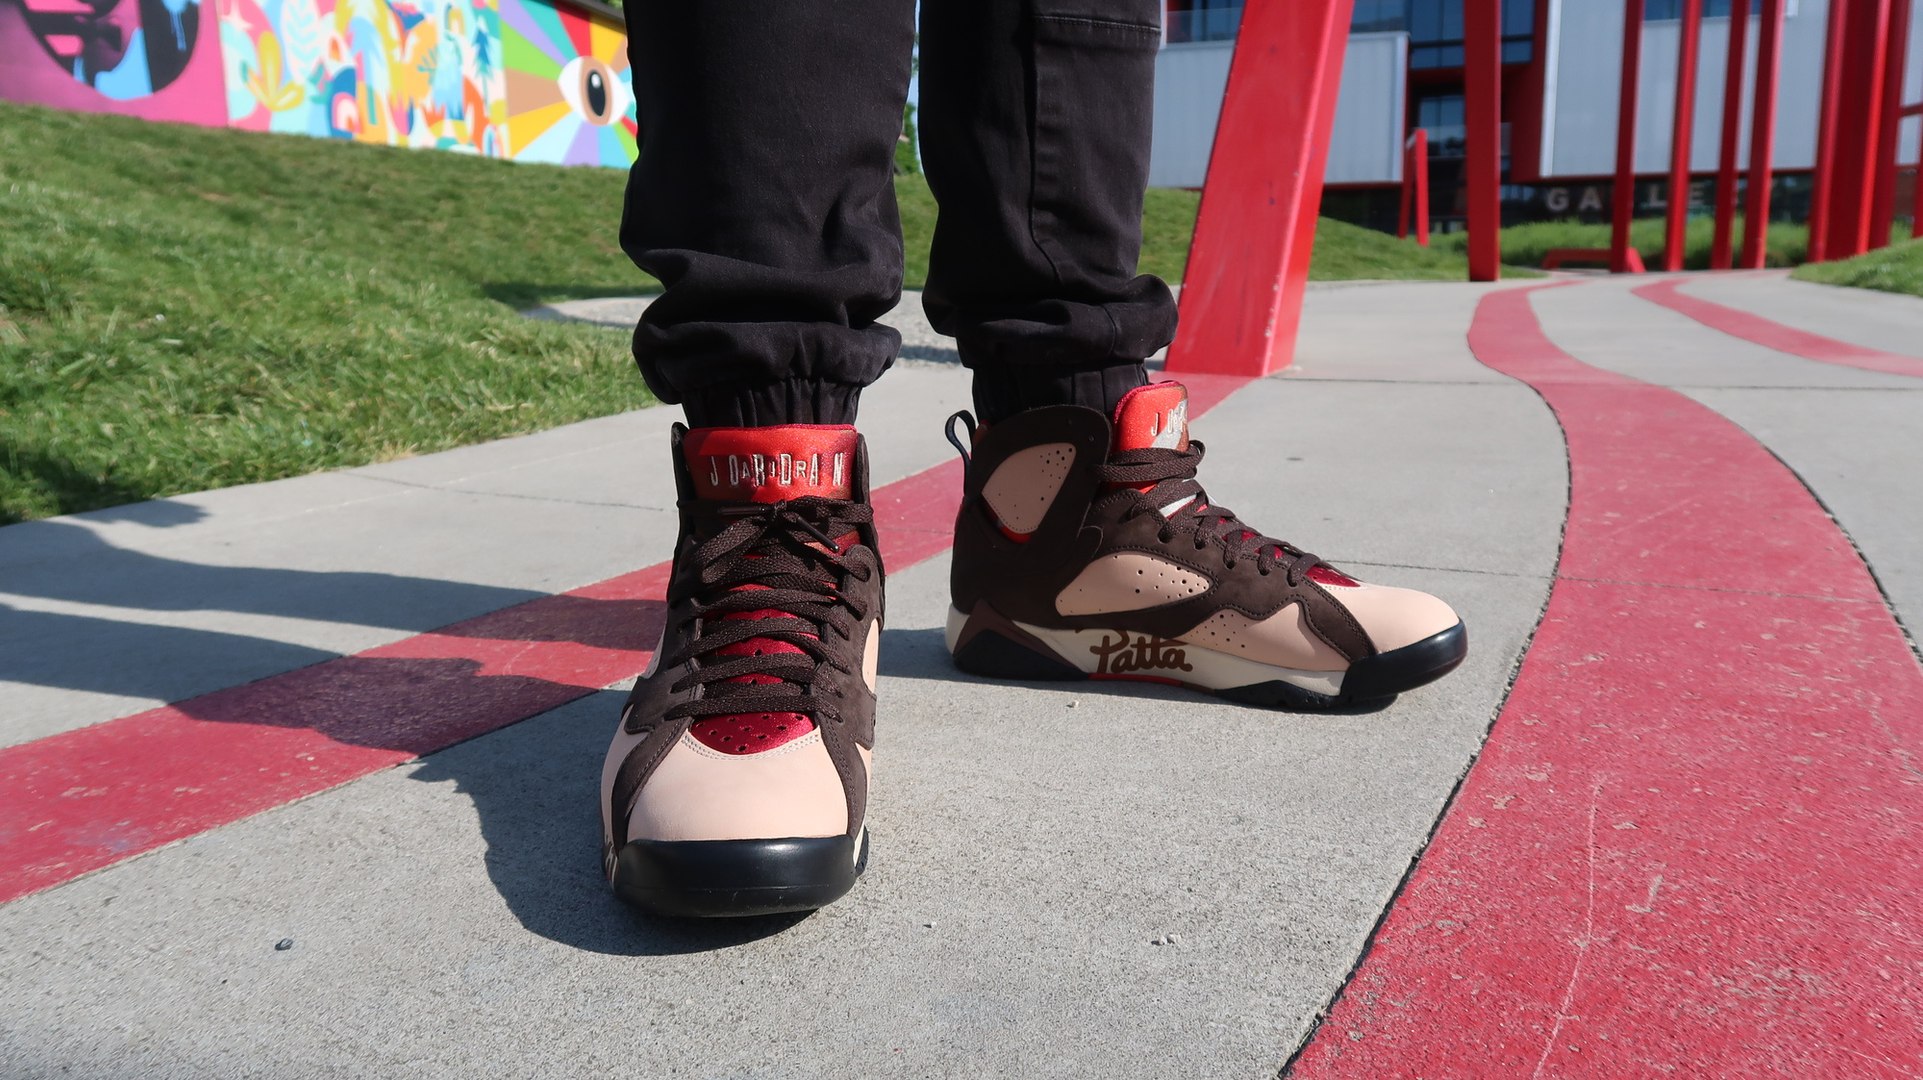 Sillón Sympton Declaración Patta Air Jordan 7 VII Retro Sneaker Unboxing Detailed Look On Feet - video  Dailymotion